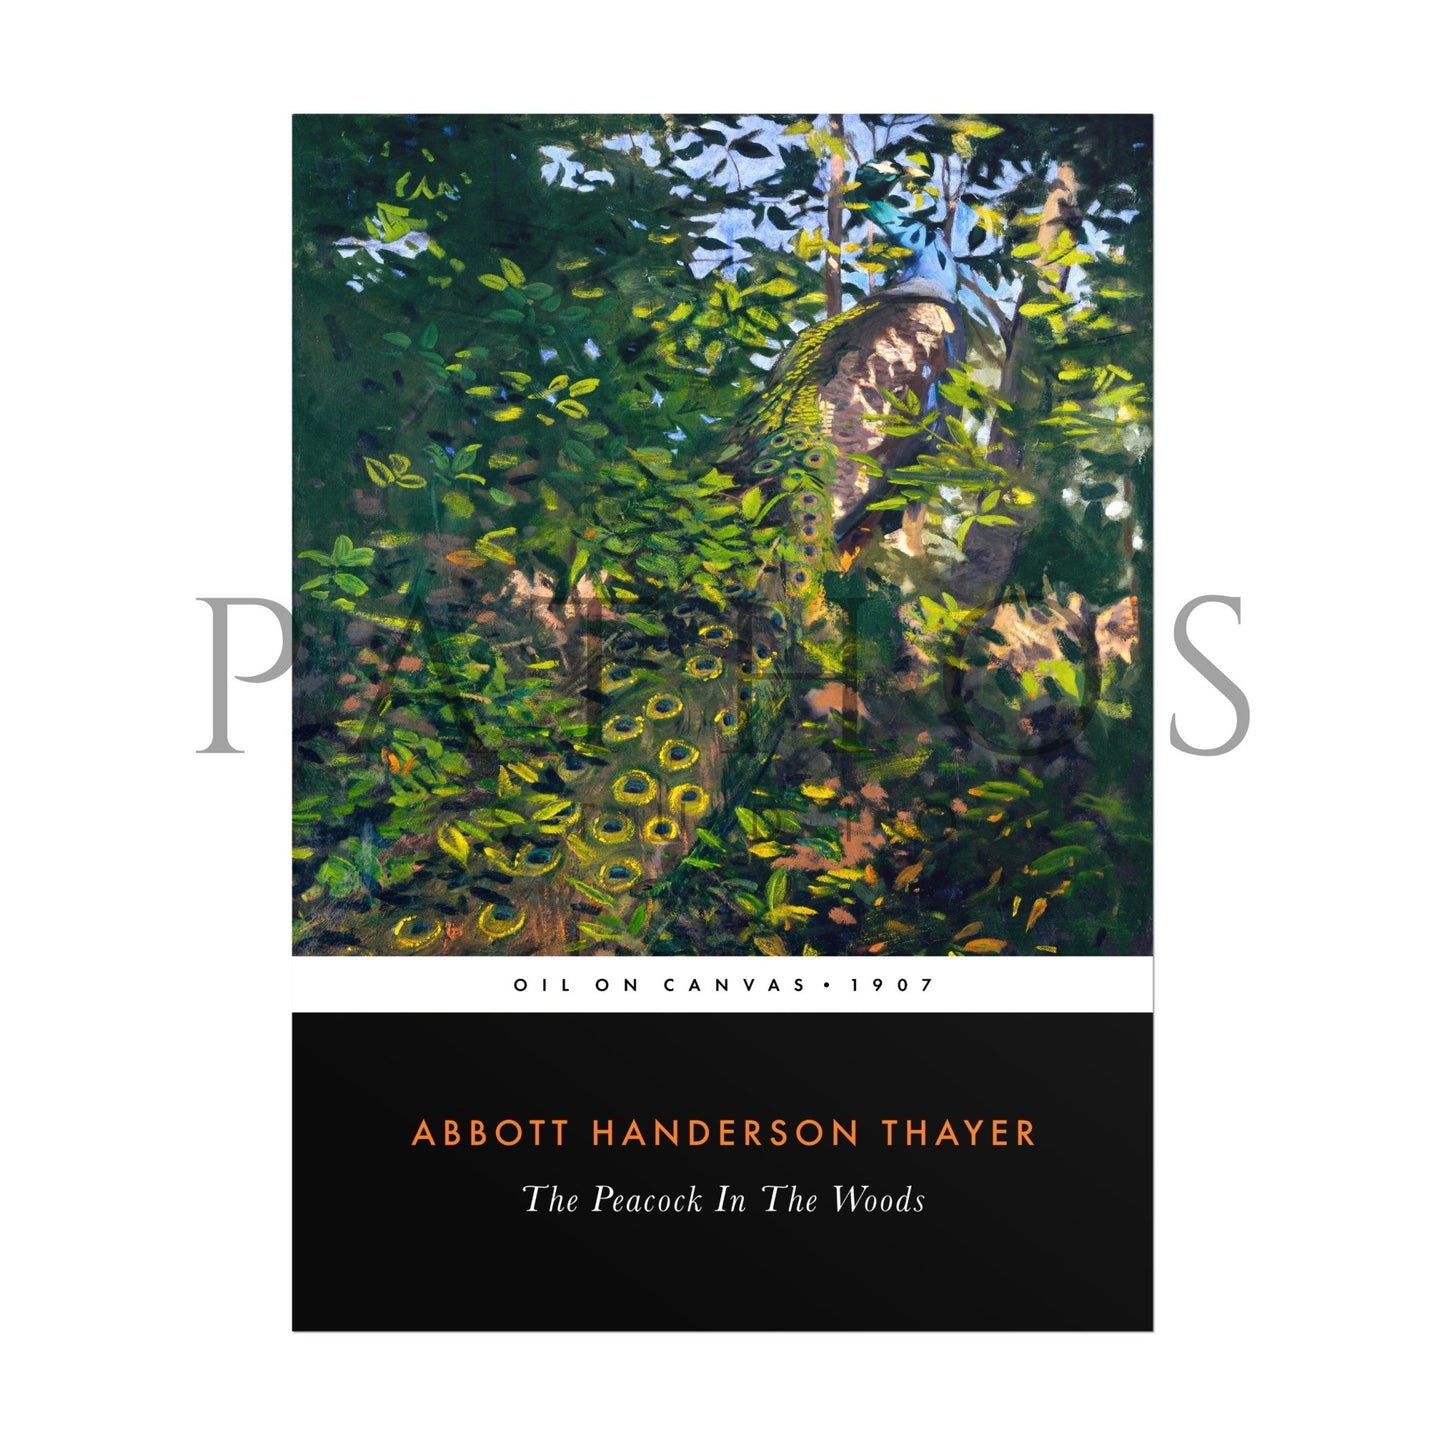 ABBOTT HANDERSON THAYER - The Peacock In The Woods (Vintage Classic Style) - Pathos Studio - Art Prints